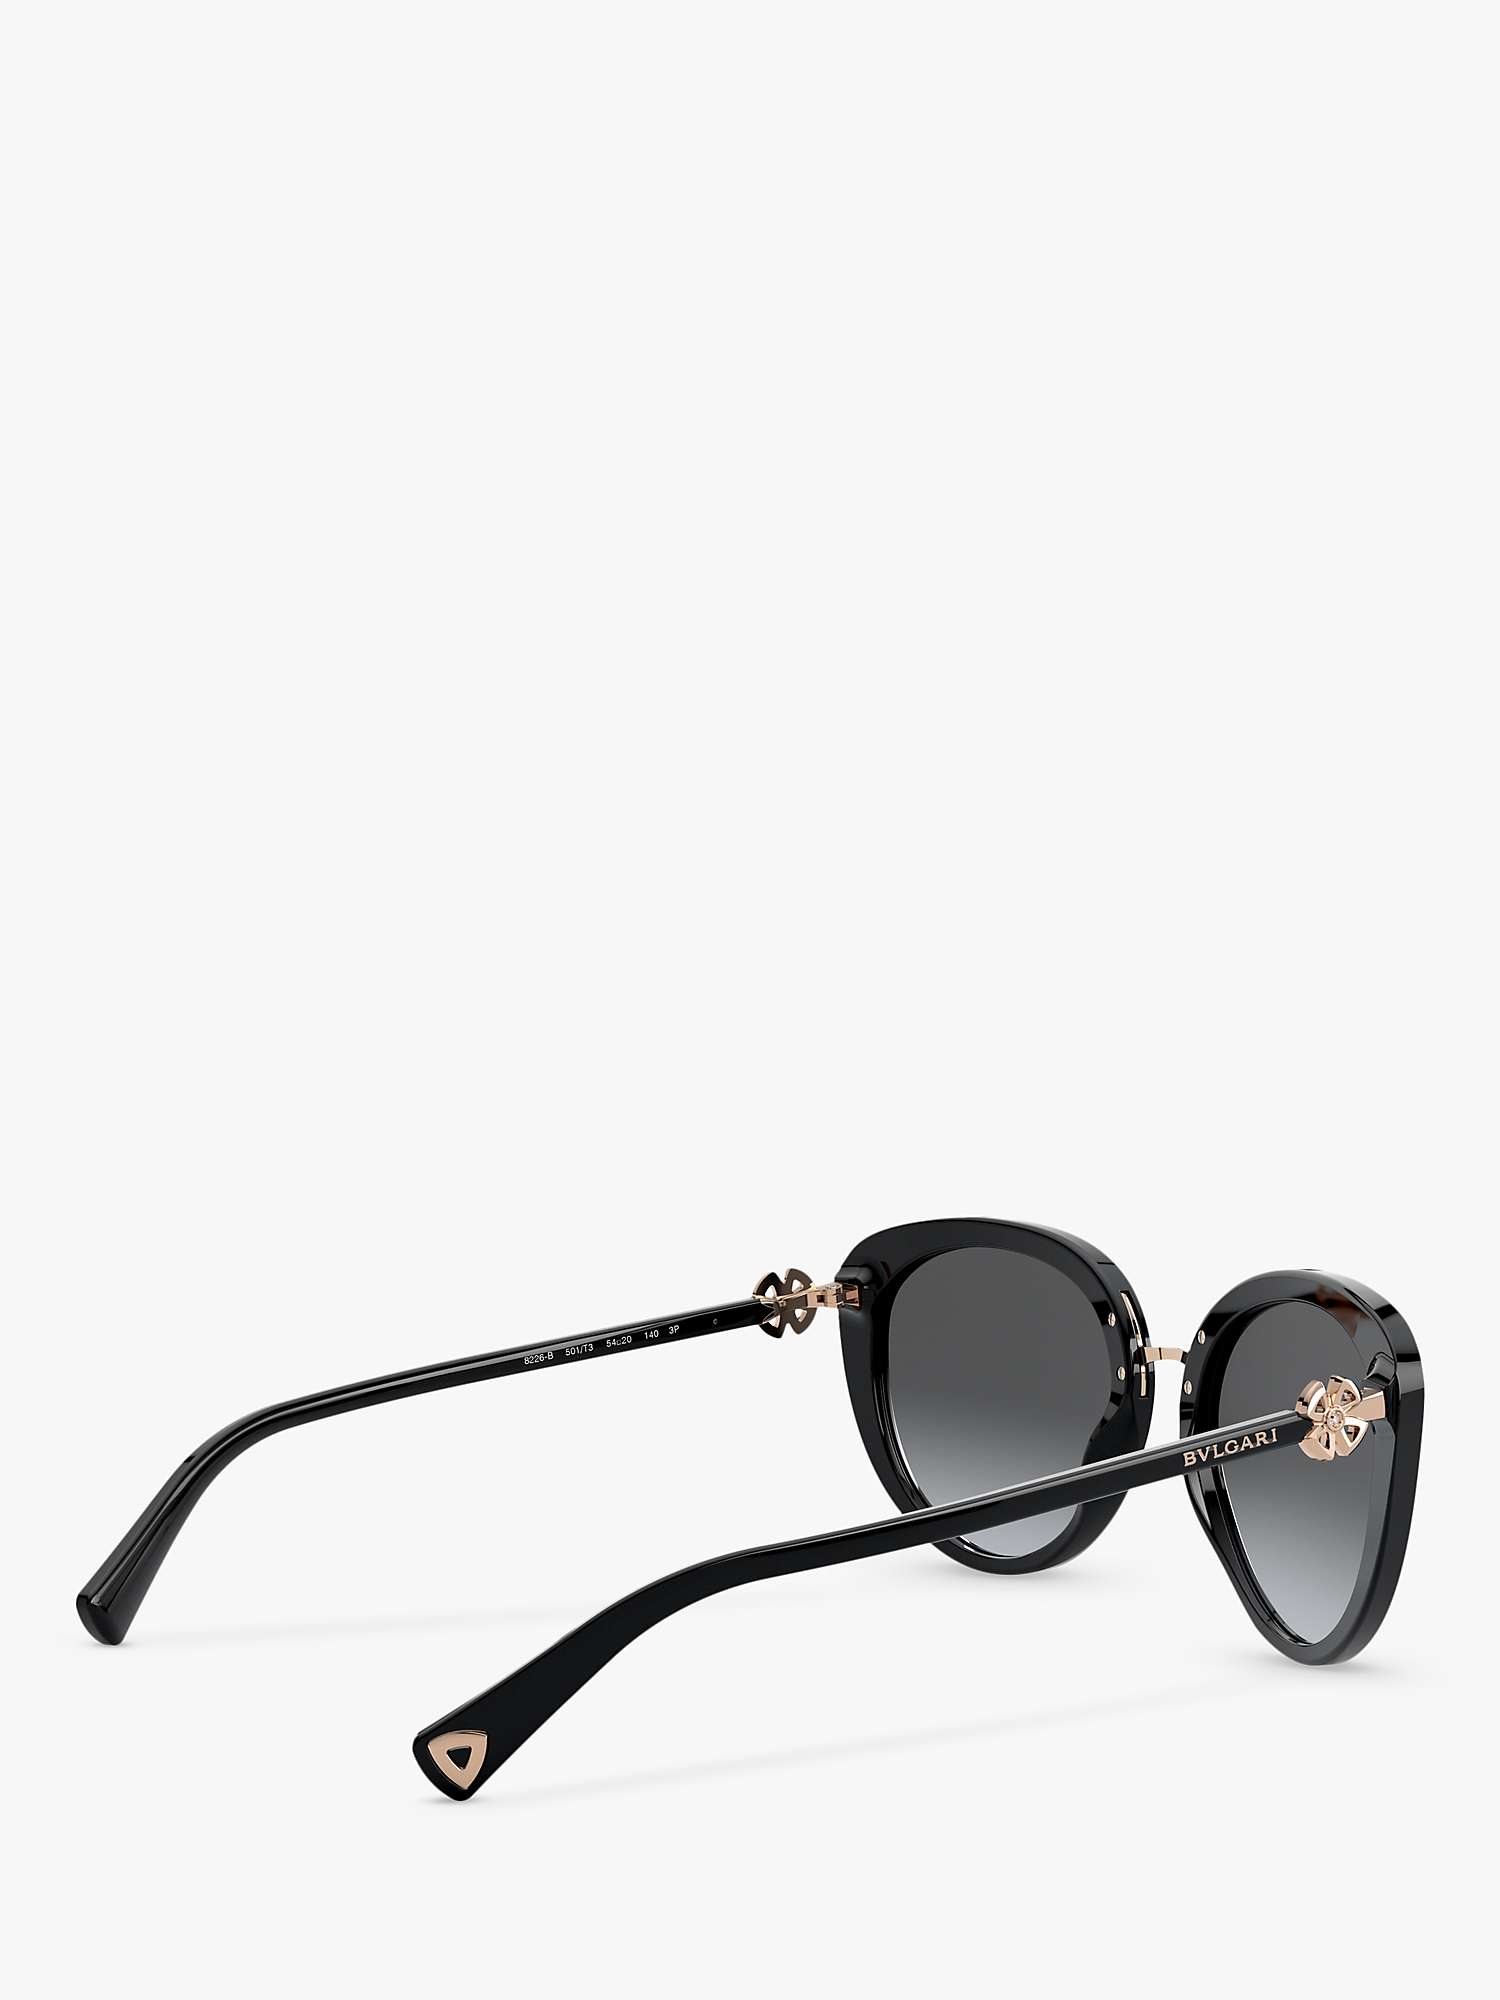 Buy BVLGARI BV8226B Women's Oval Sunglasses, Black Online at johnlewis.com